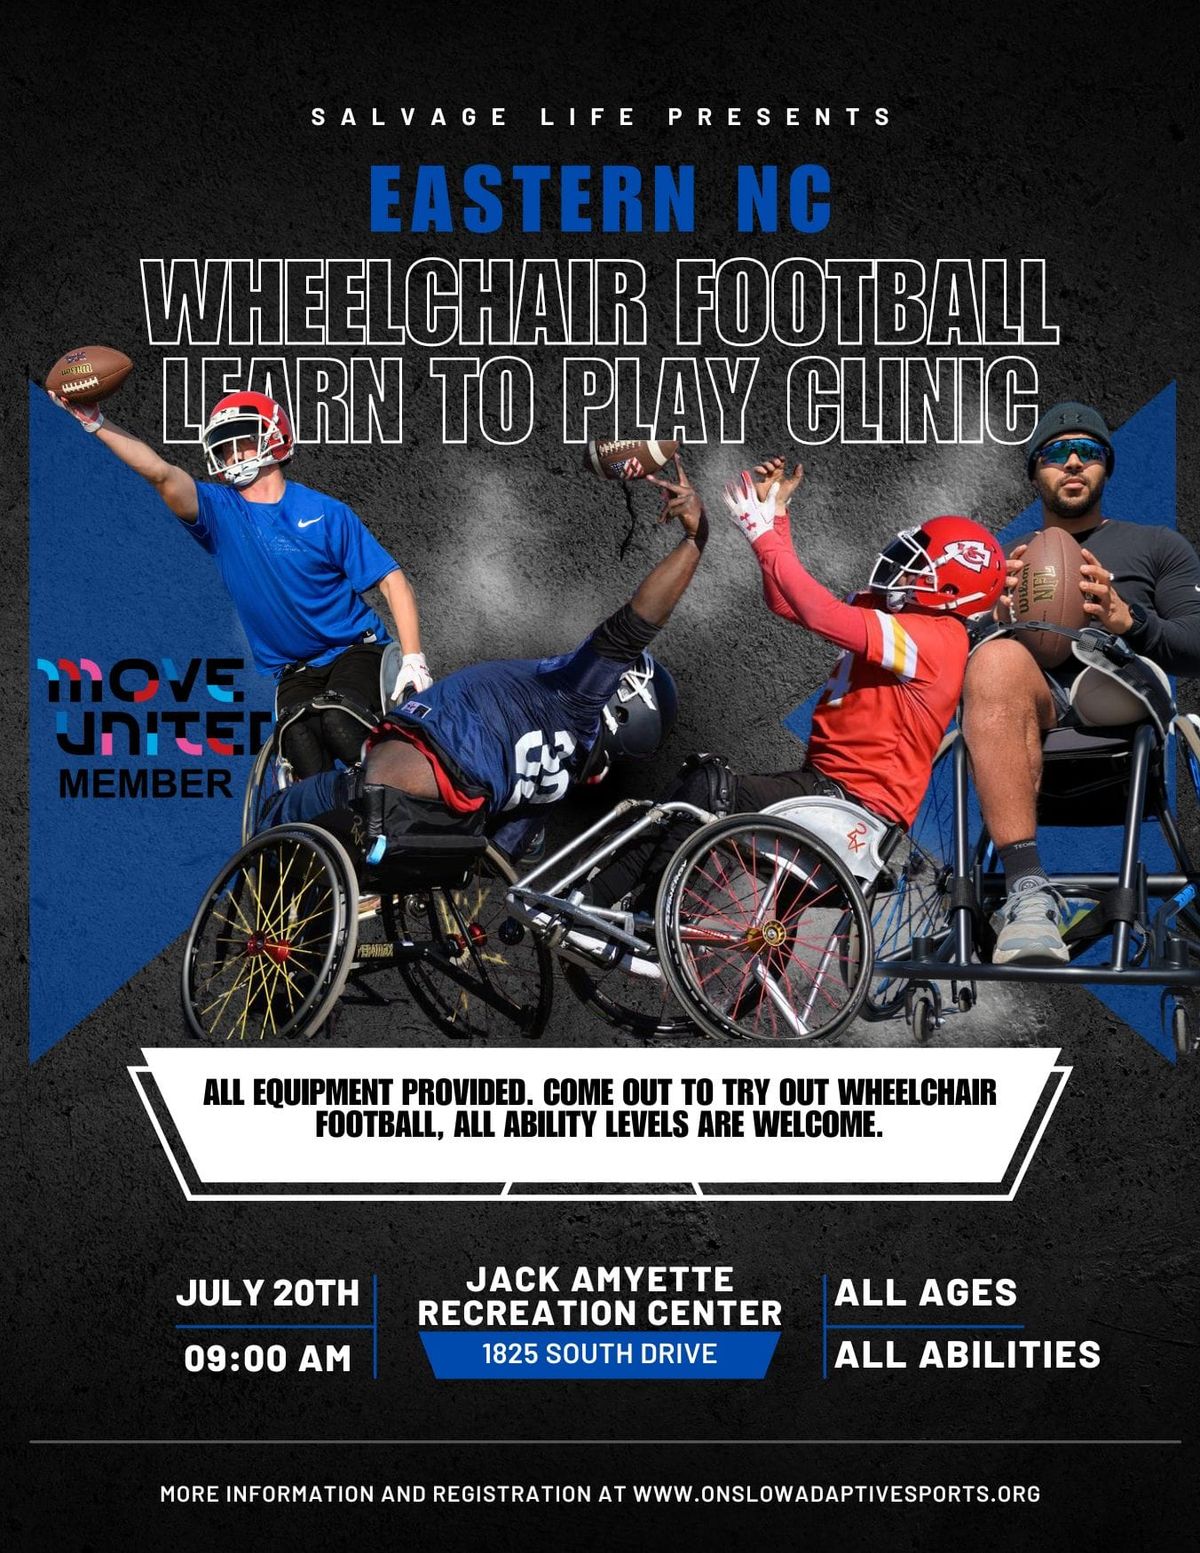 USA Wheelchair Football League Learn-To-Play Clinic (Carolinas)